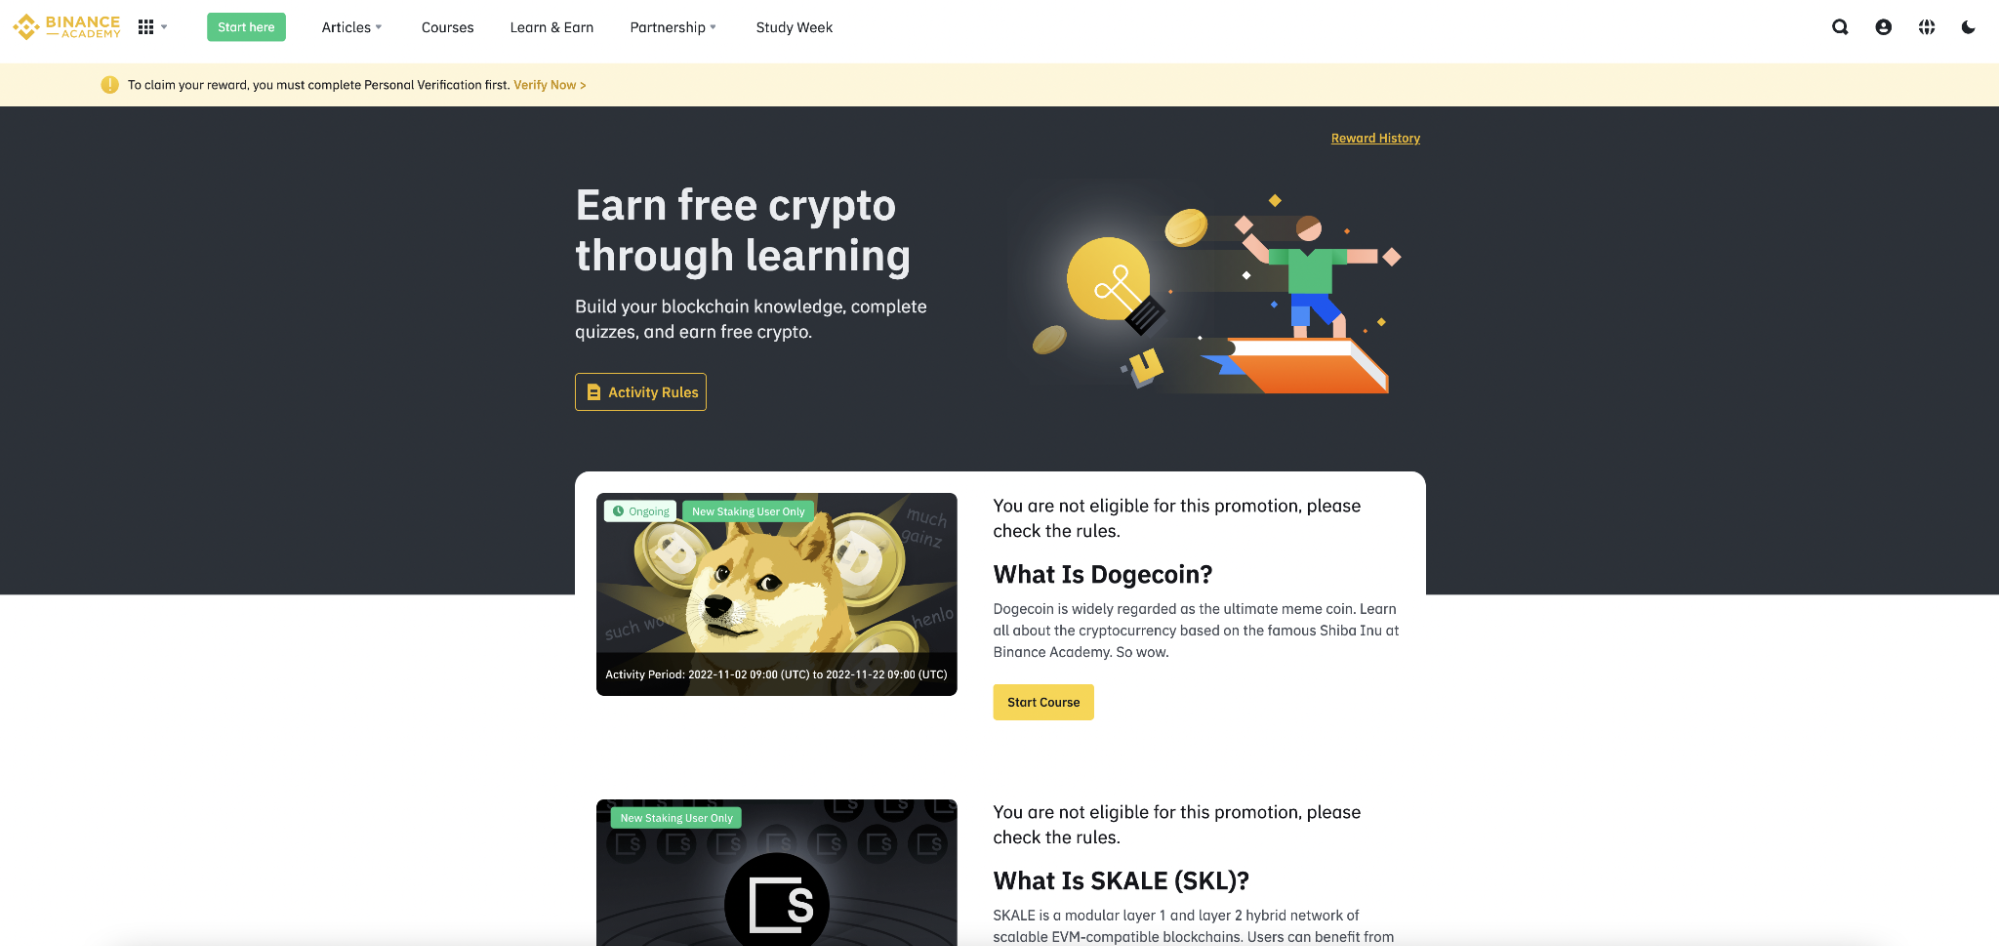 Binance - earn free crypto by learning